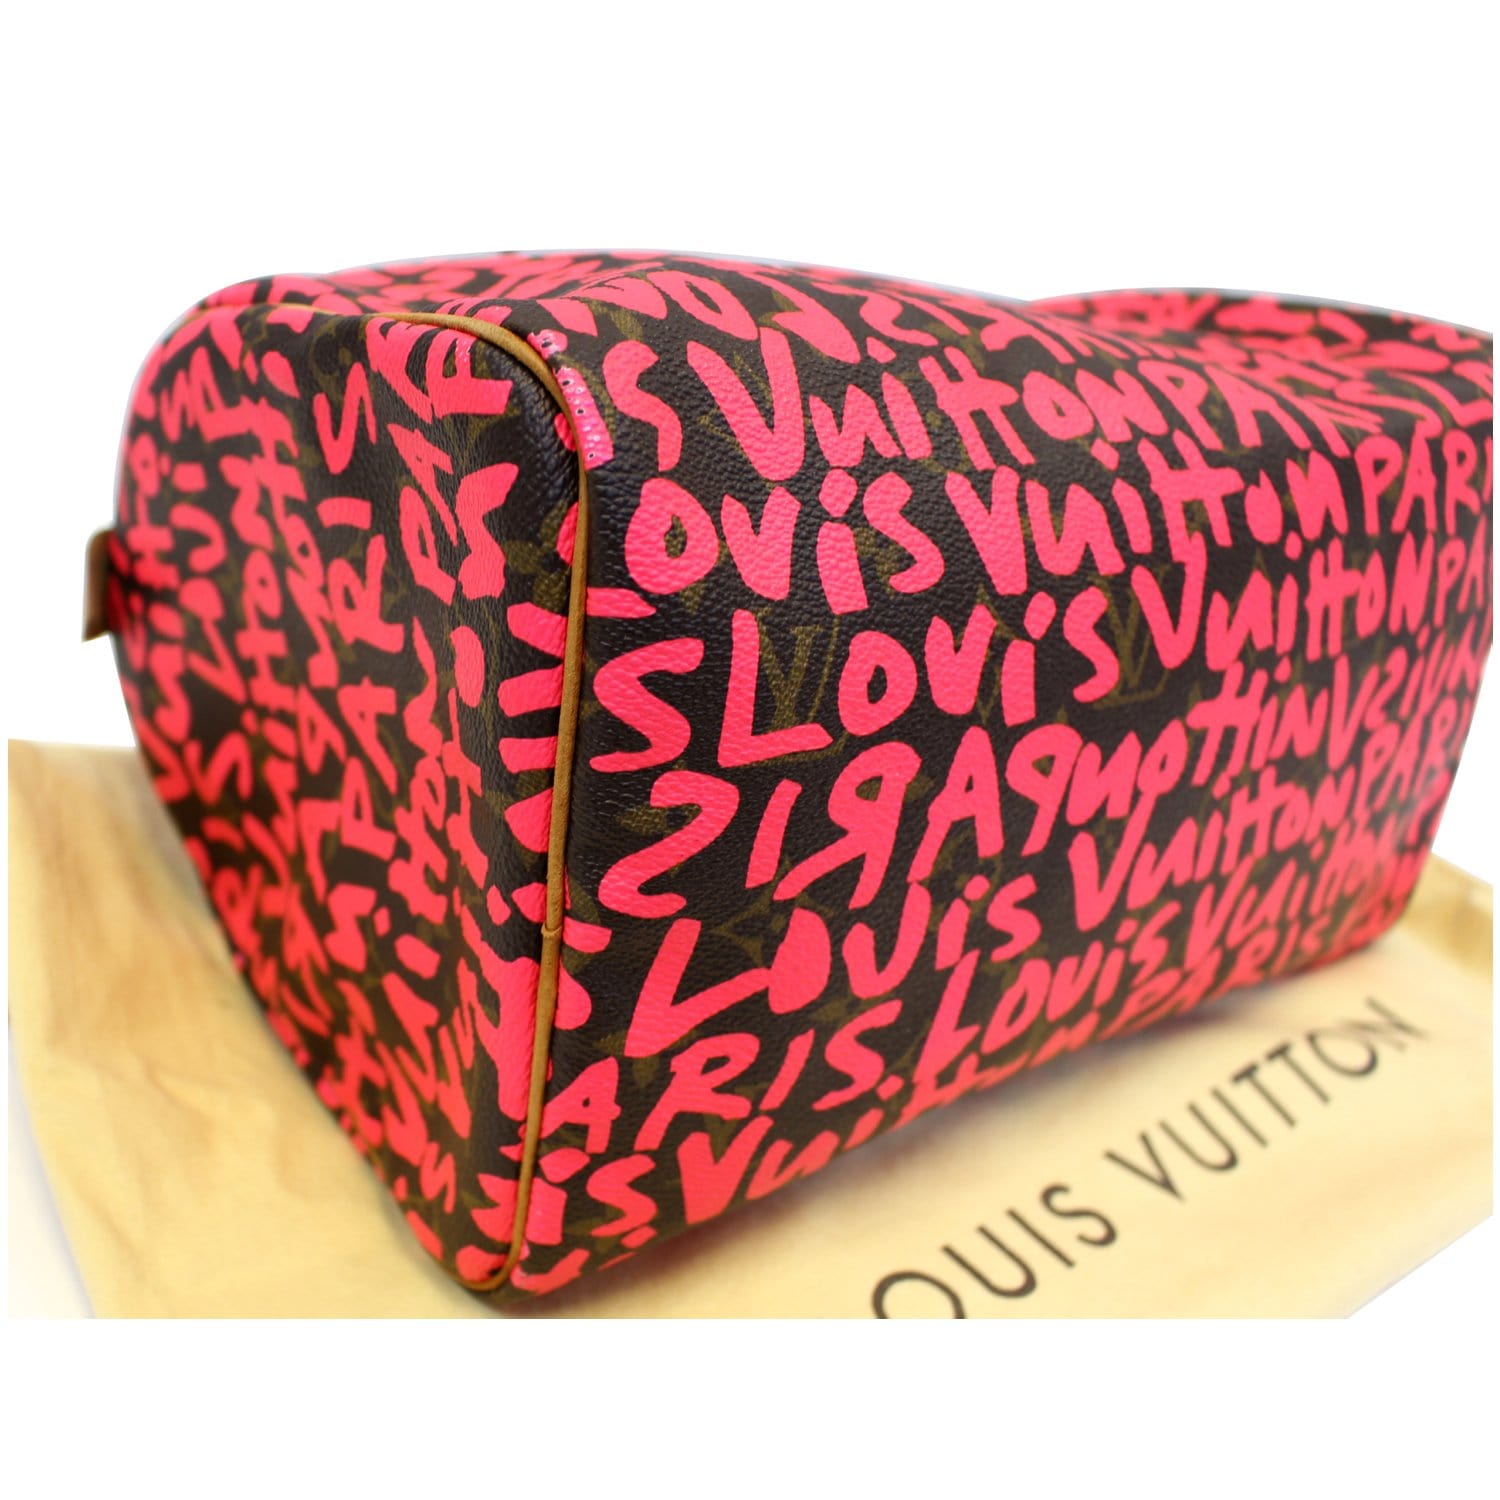 Louis Vuitton Speedy 30 Handbag Monogram Graffiti Green M93706 TH4098 78734